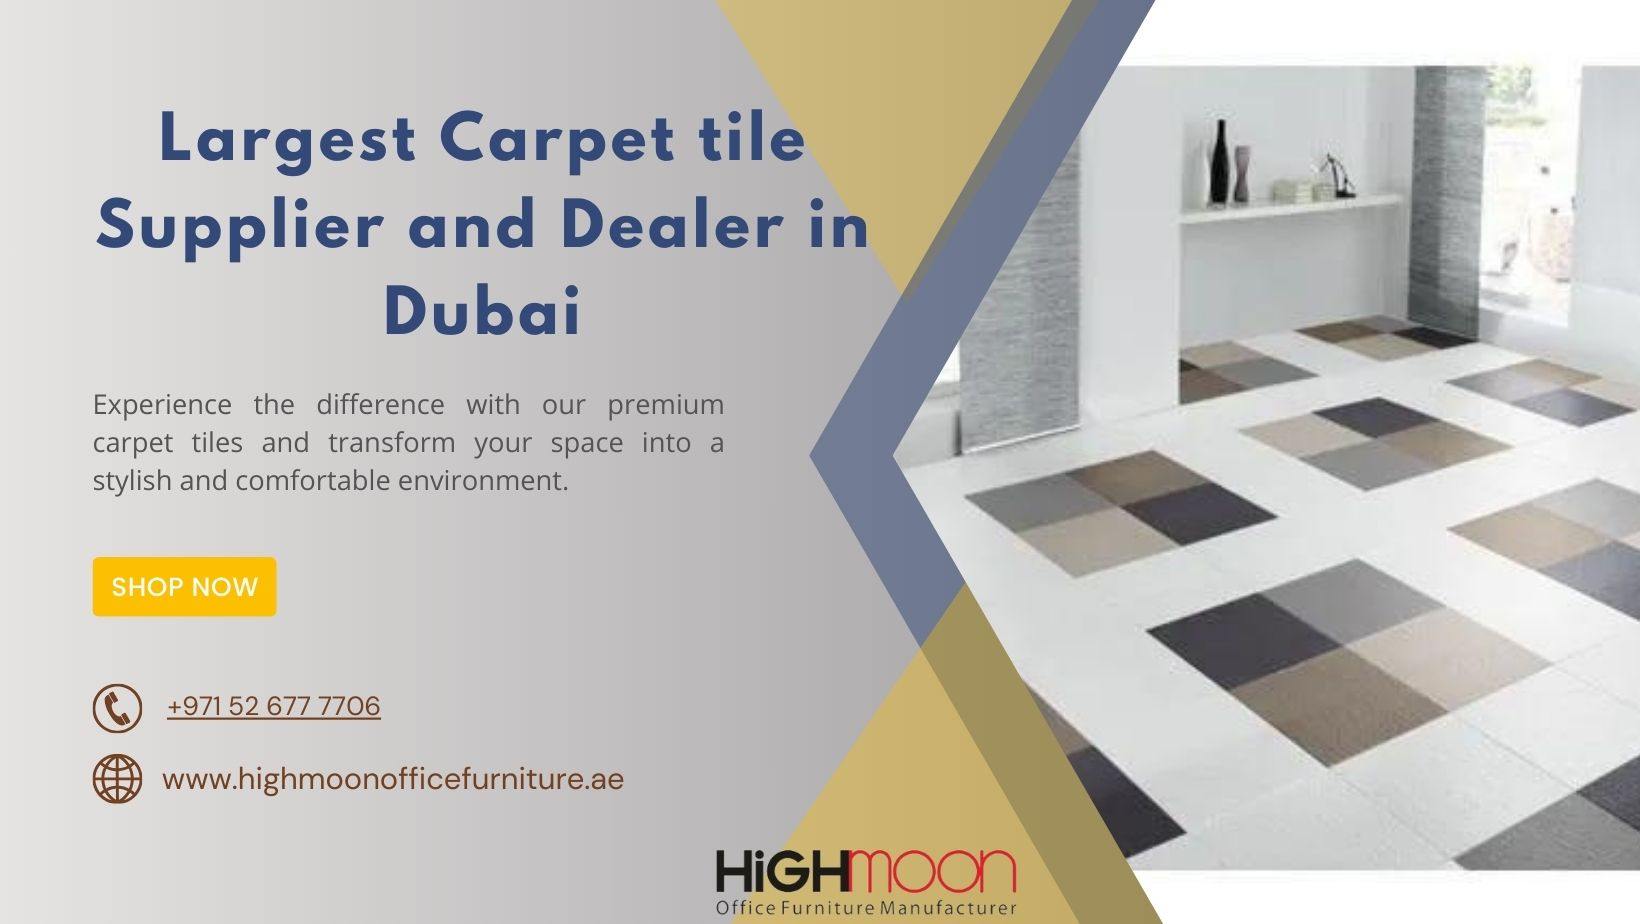 Largest carpet tile supplier and dealer in Dubai